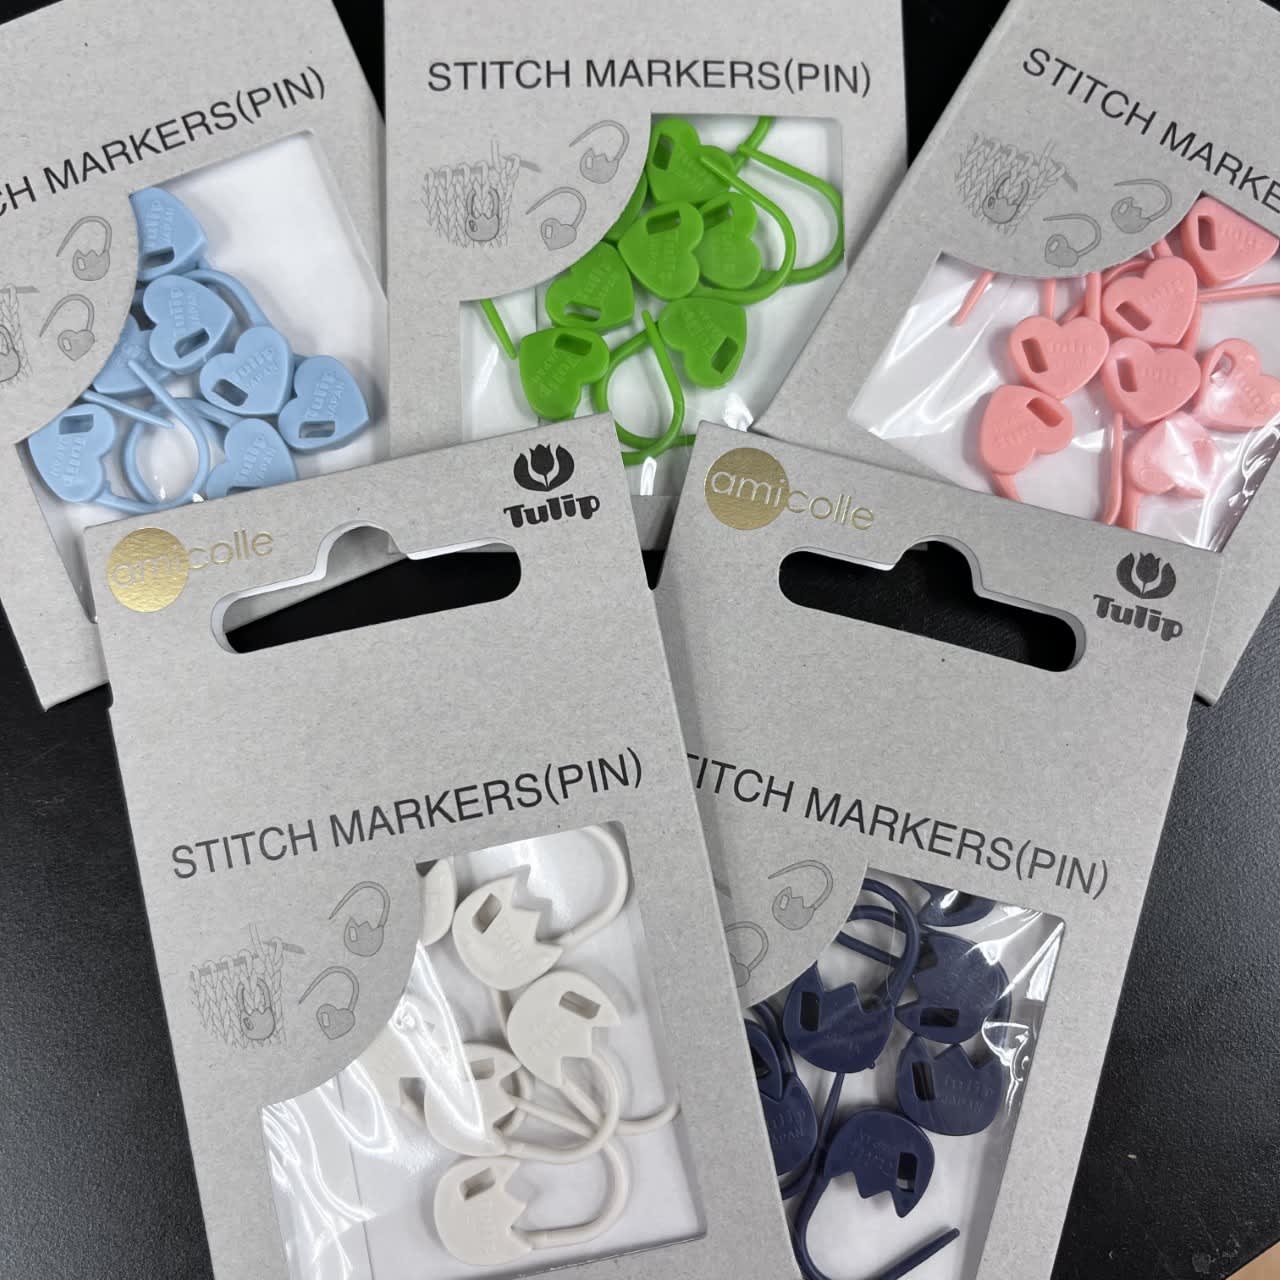 Precious Metal Stitch Markers